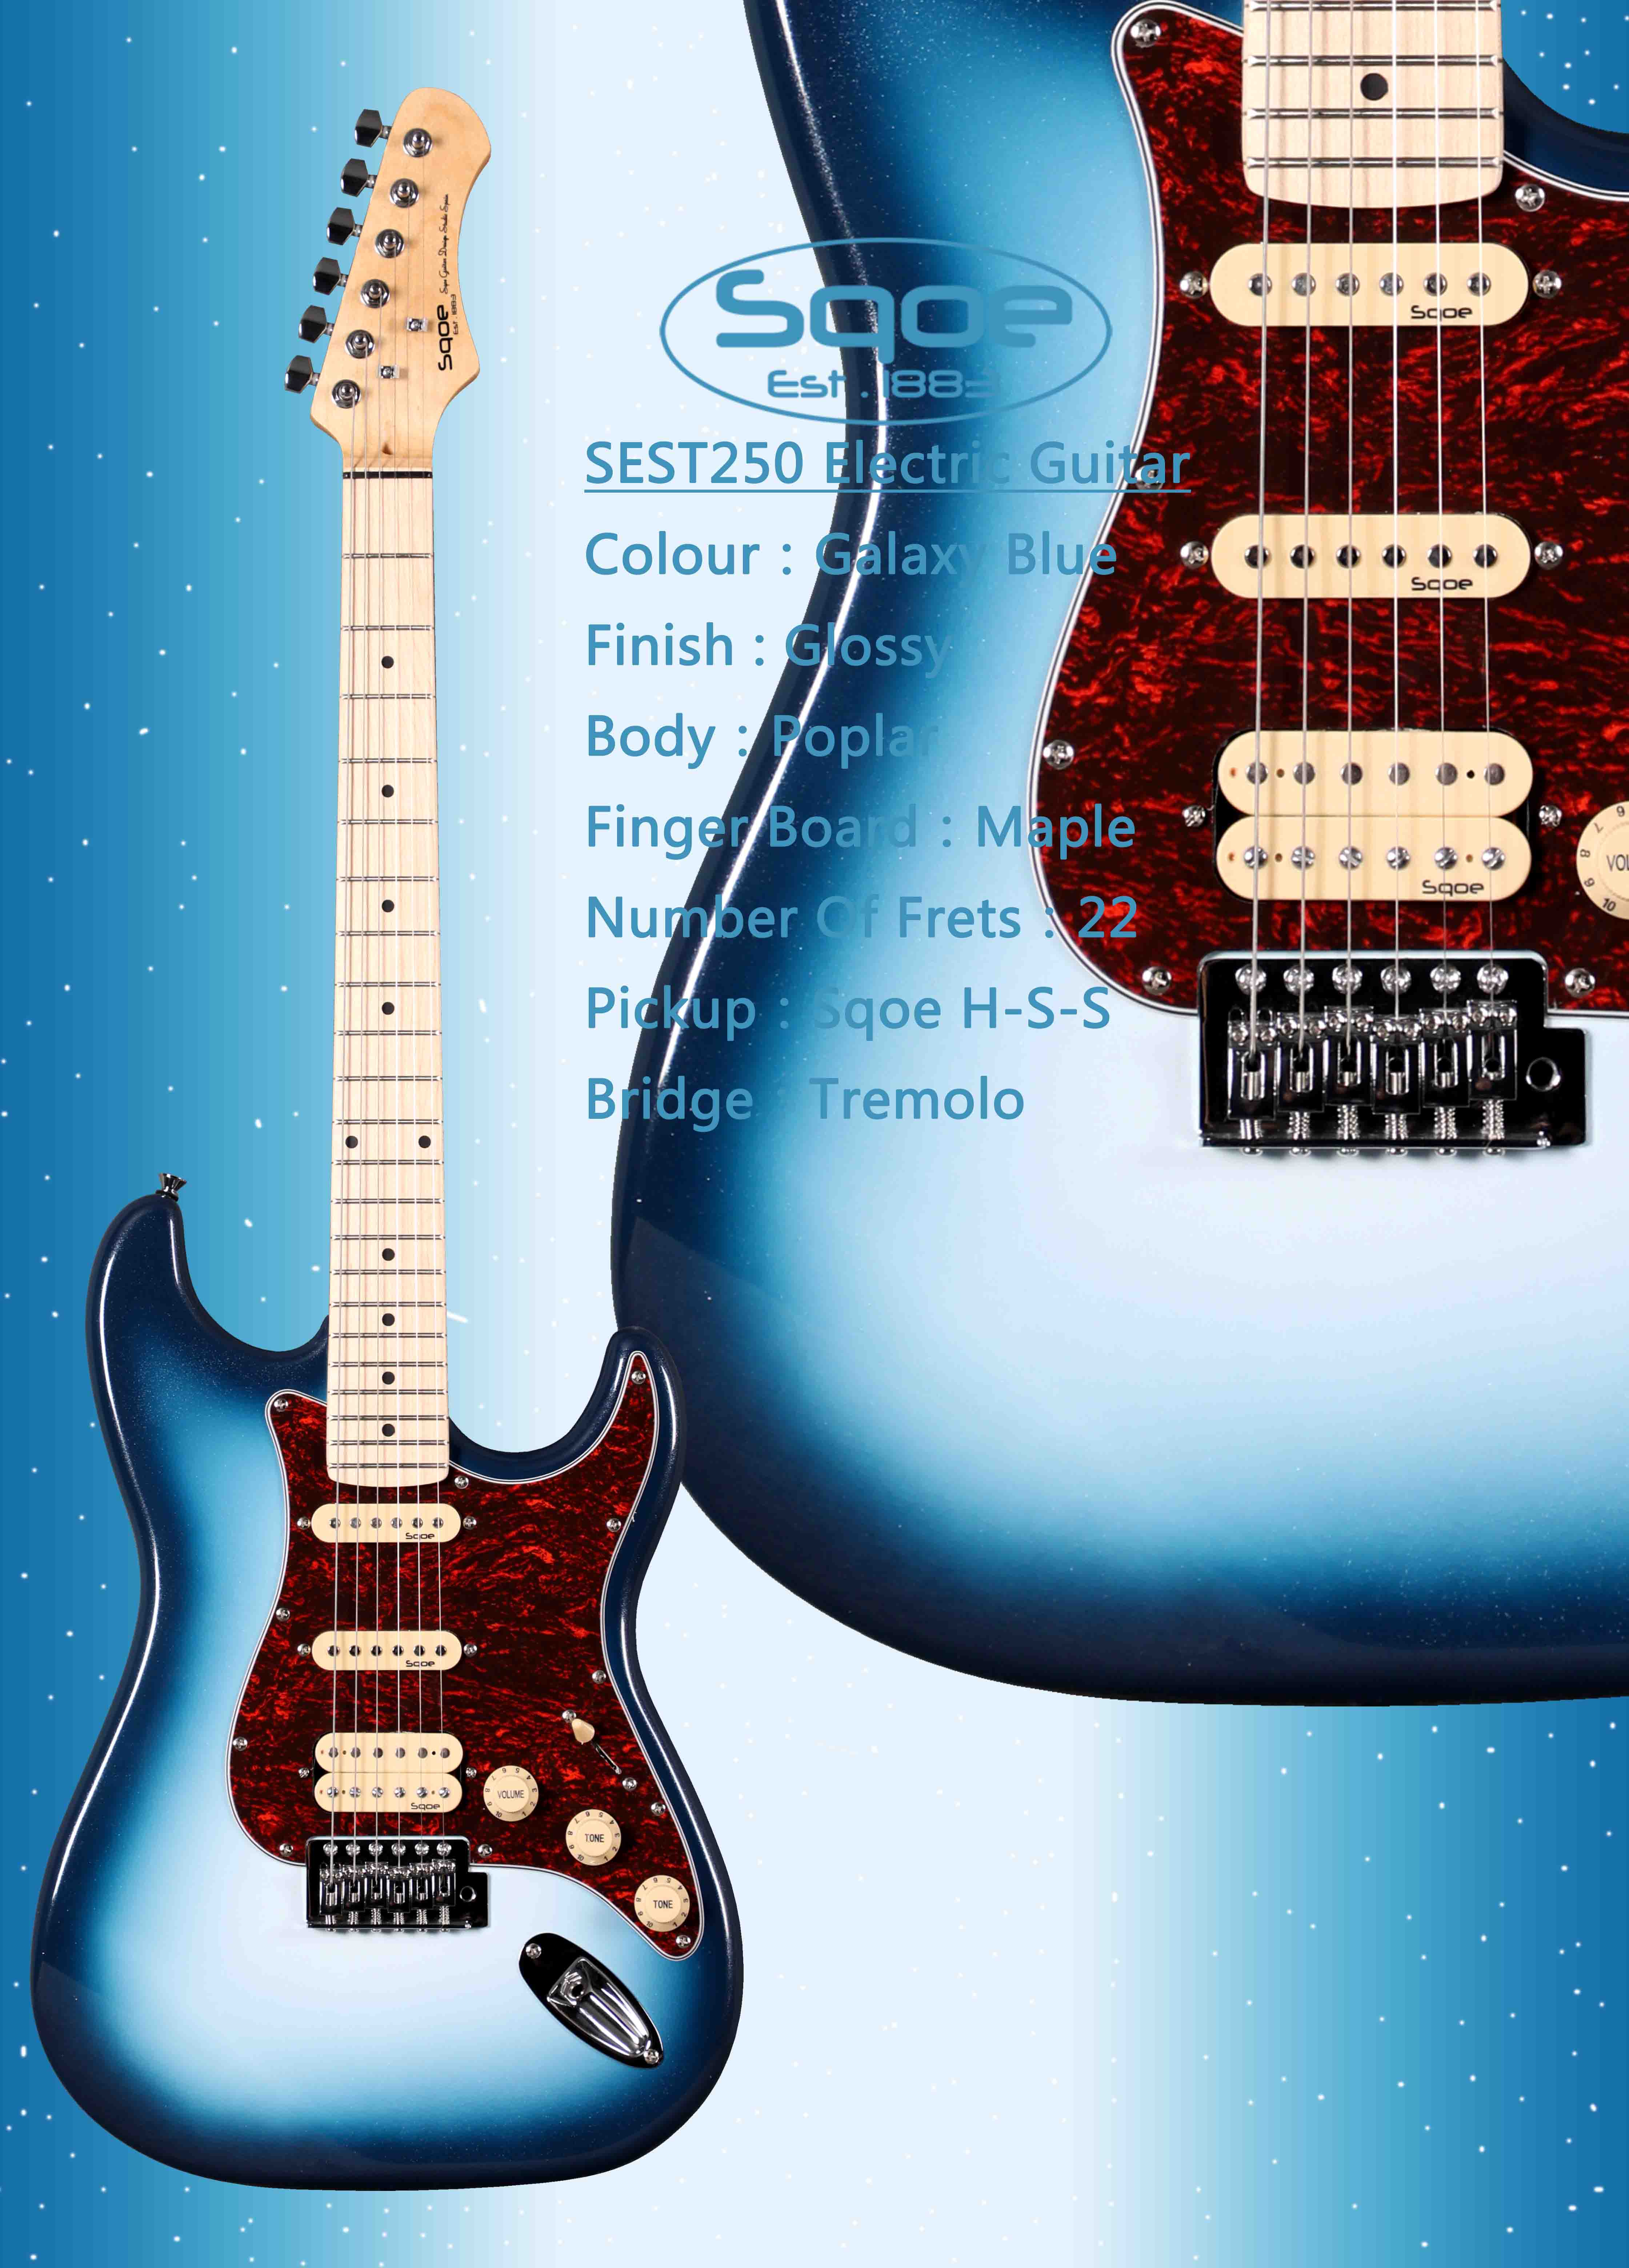 SEST250 Sqoe西班牙22品高档ST单摇电吉他-清远集思科技有限公司